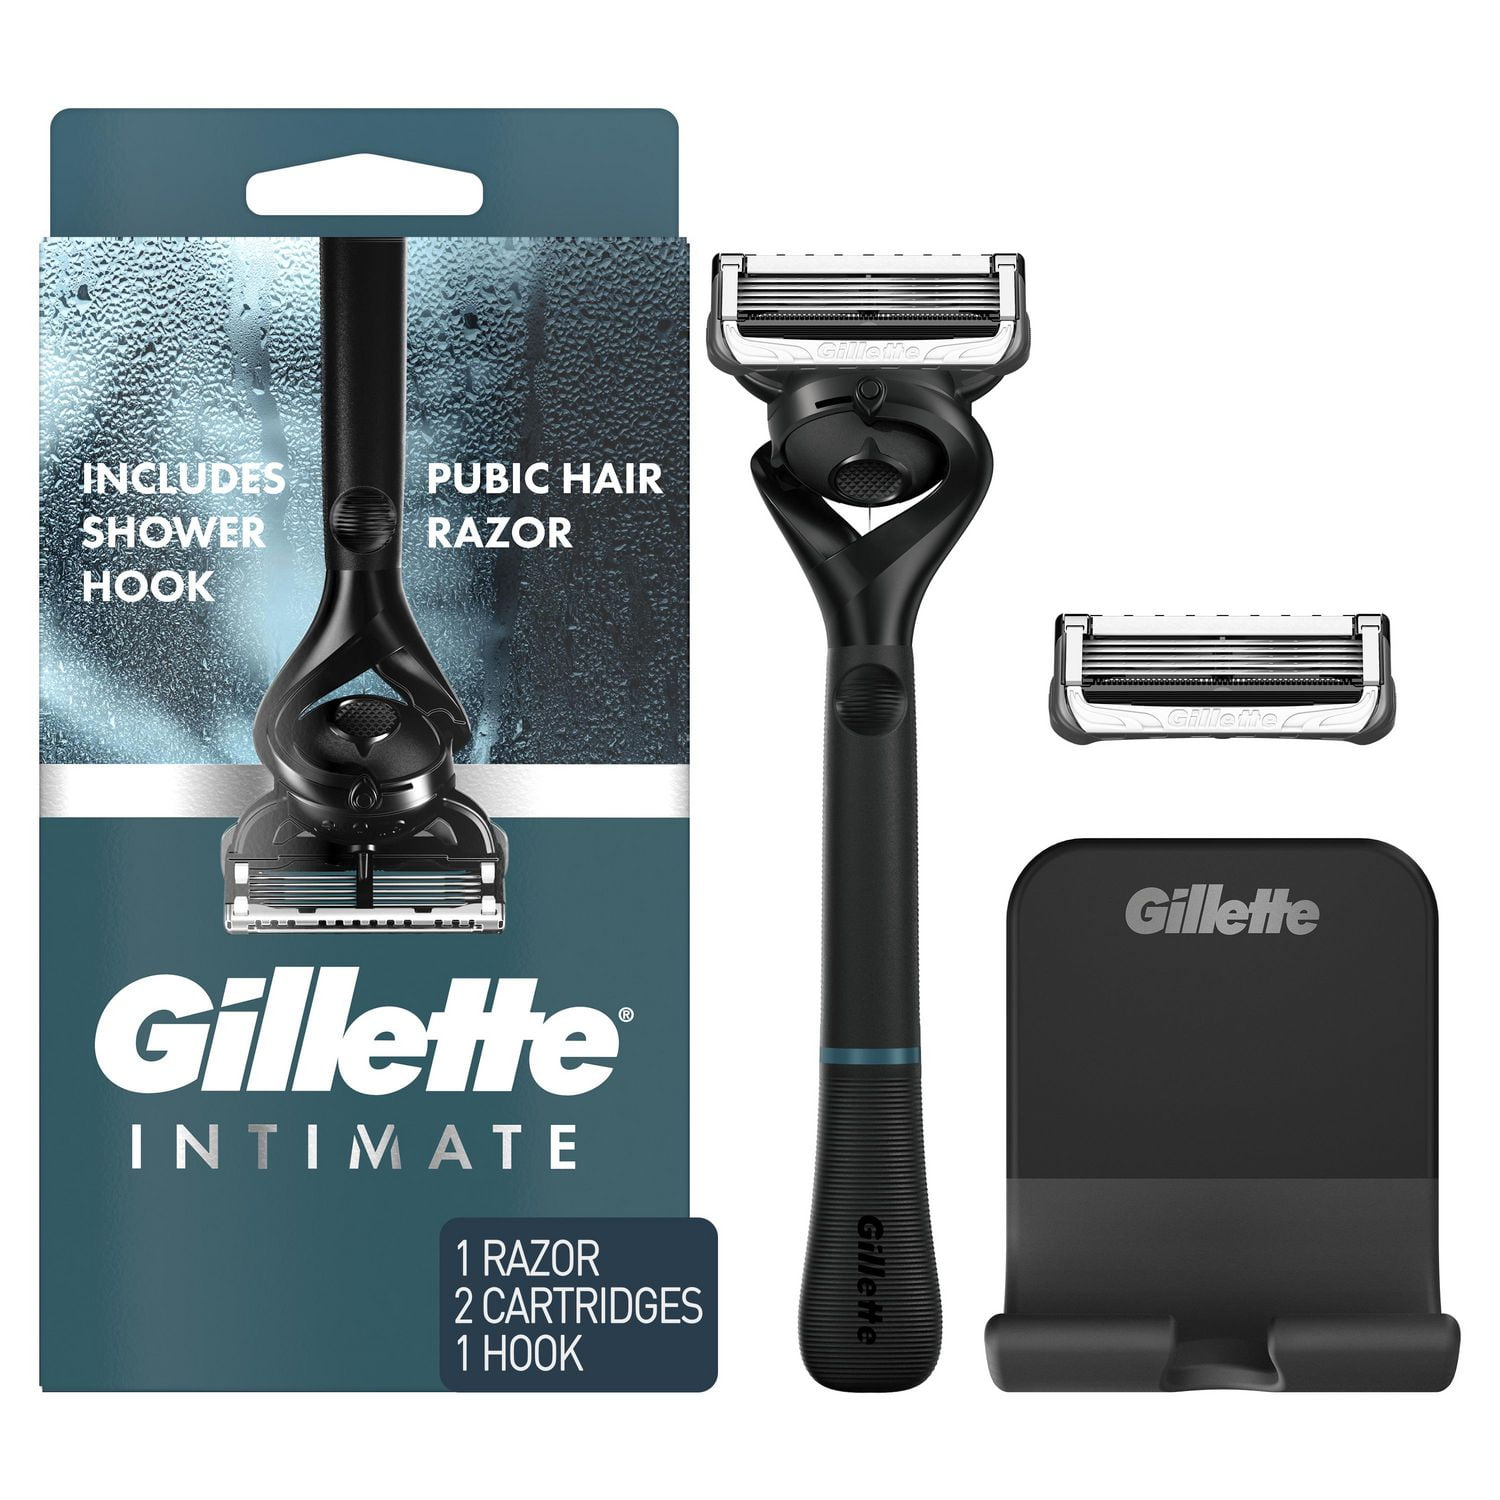 Gillette INTIMATE™ Pubic Hair Razor Bundle